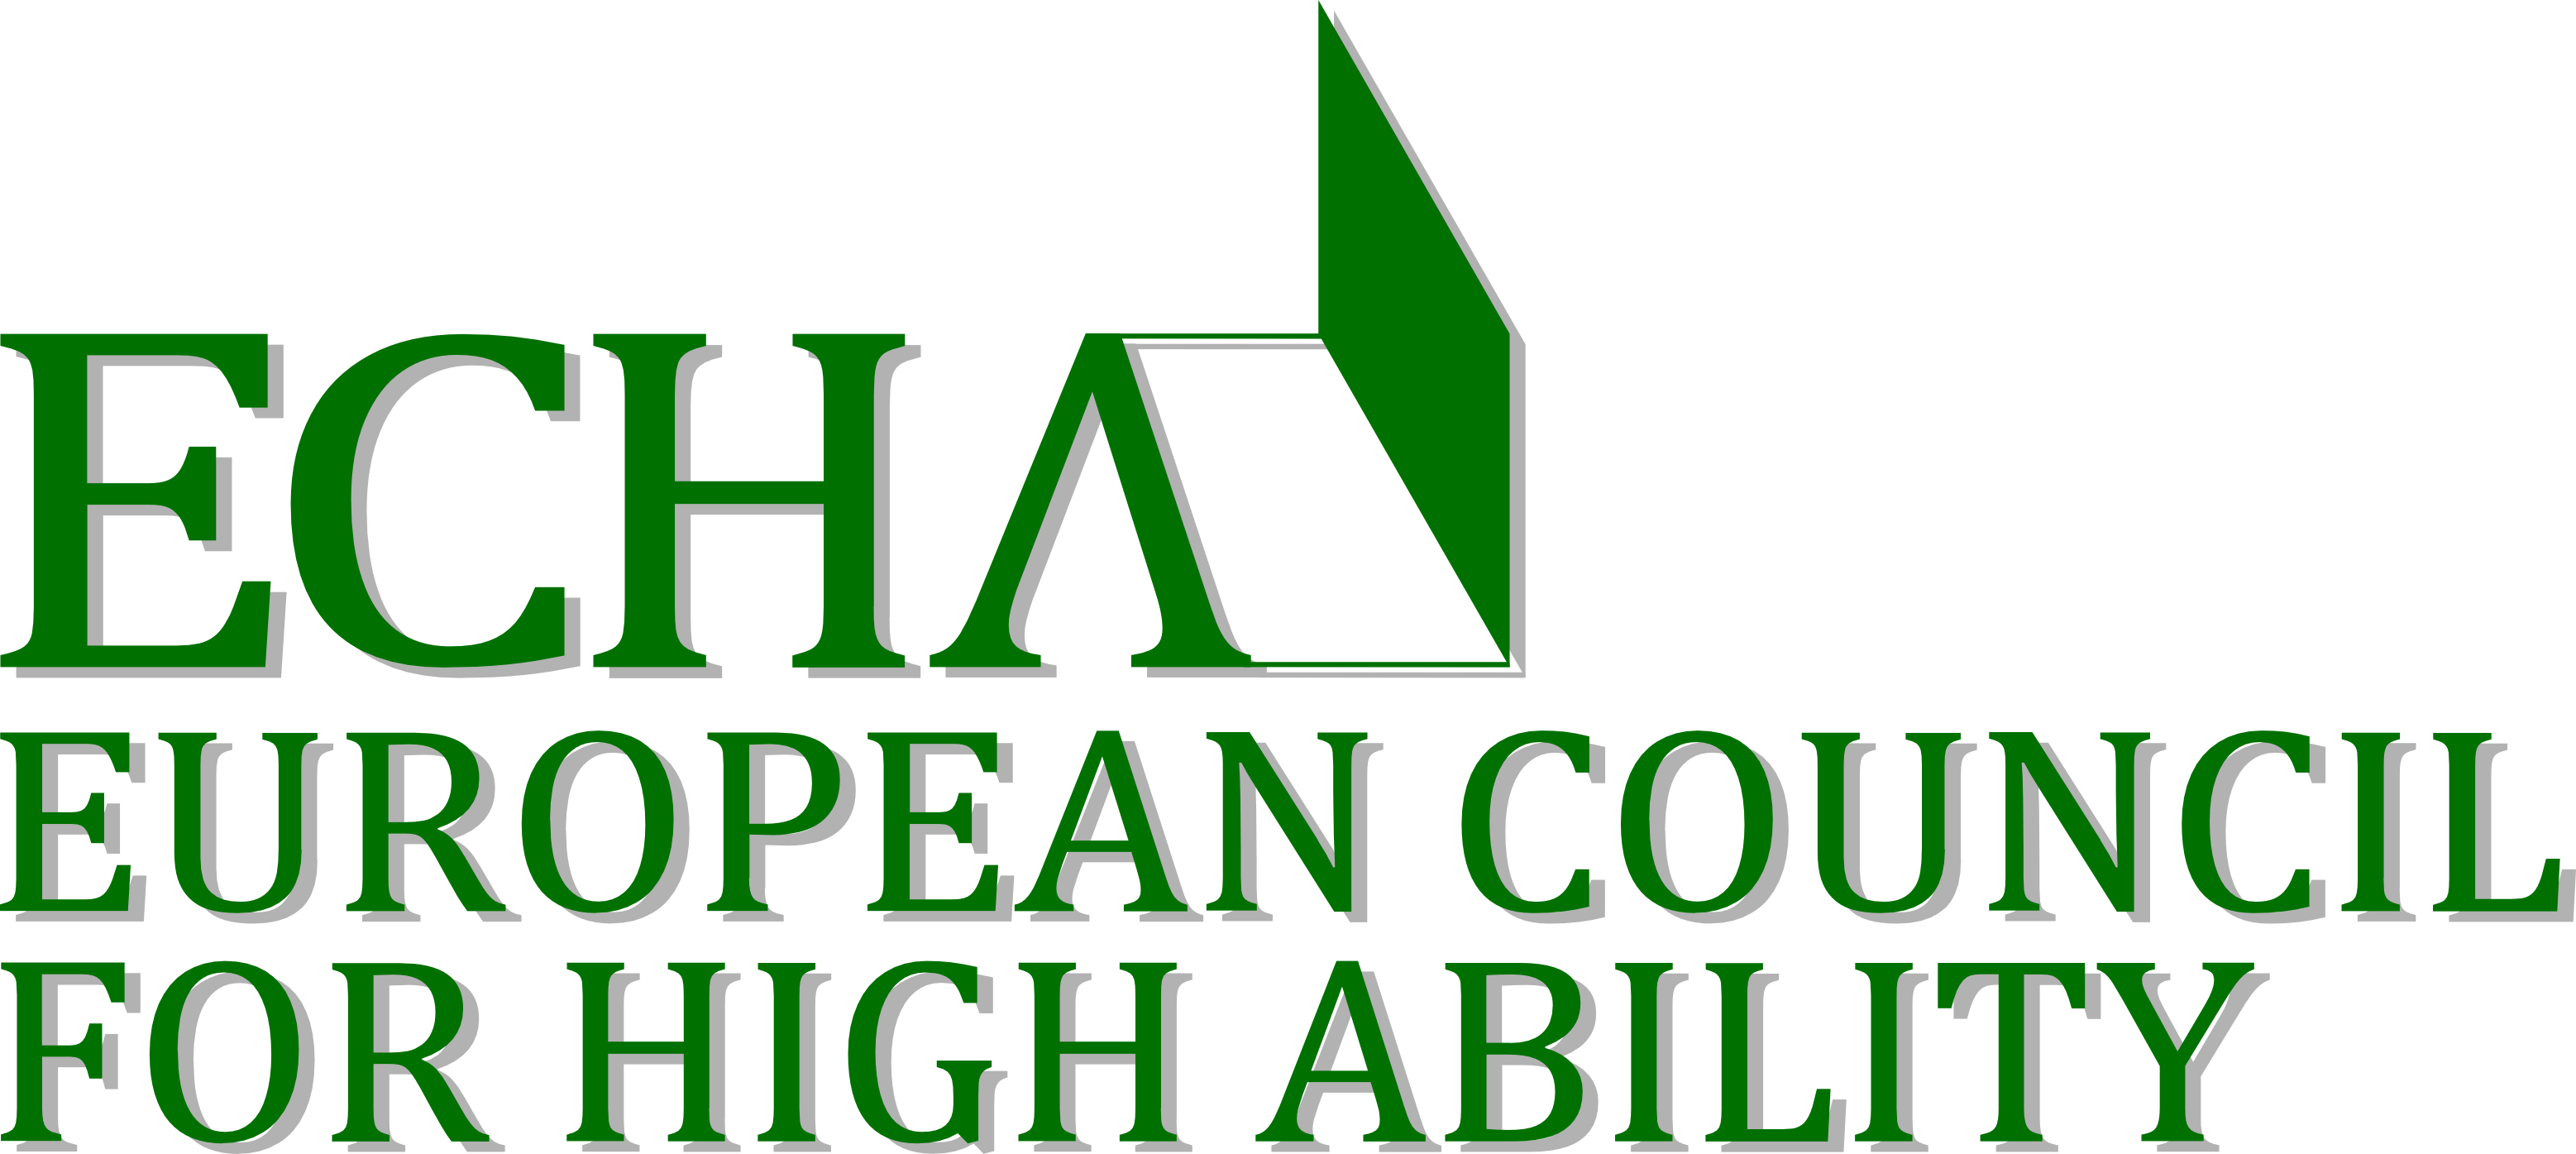 European Council for the High Ability